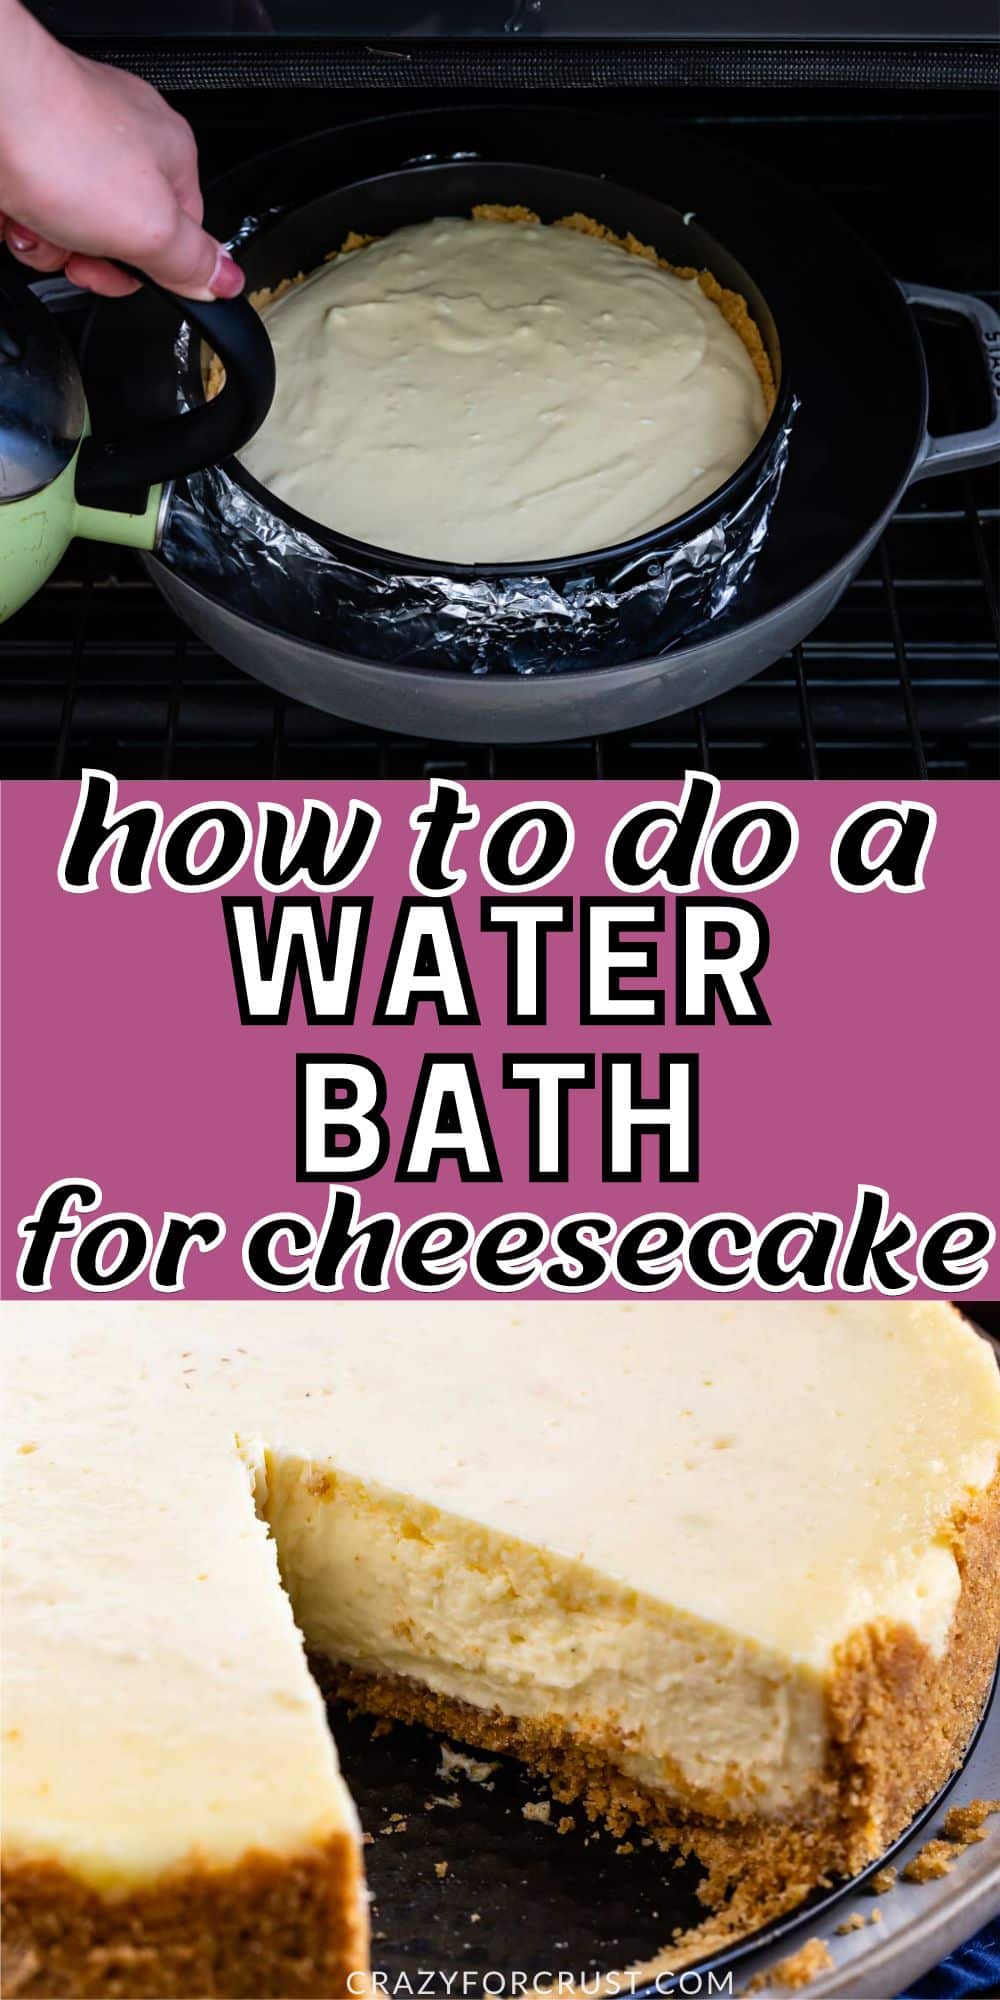 https://www.crazyforcrust.com/wp-content/uploads/2020/10/how-to-do-a-cheesecake-water-bath.jpg